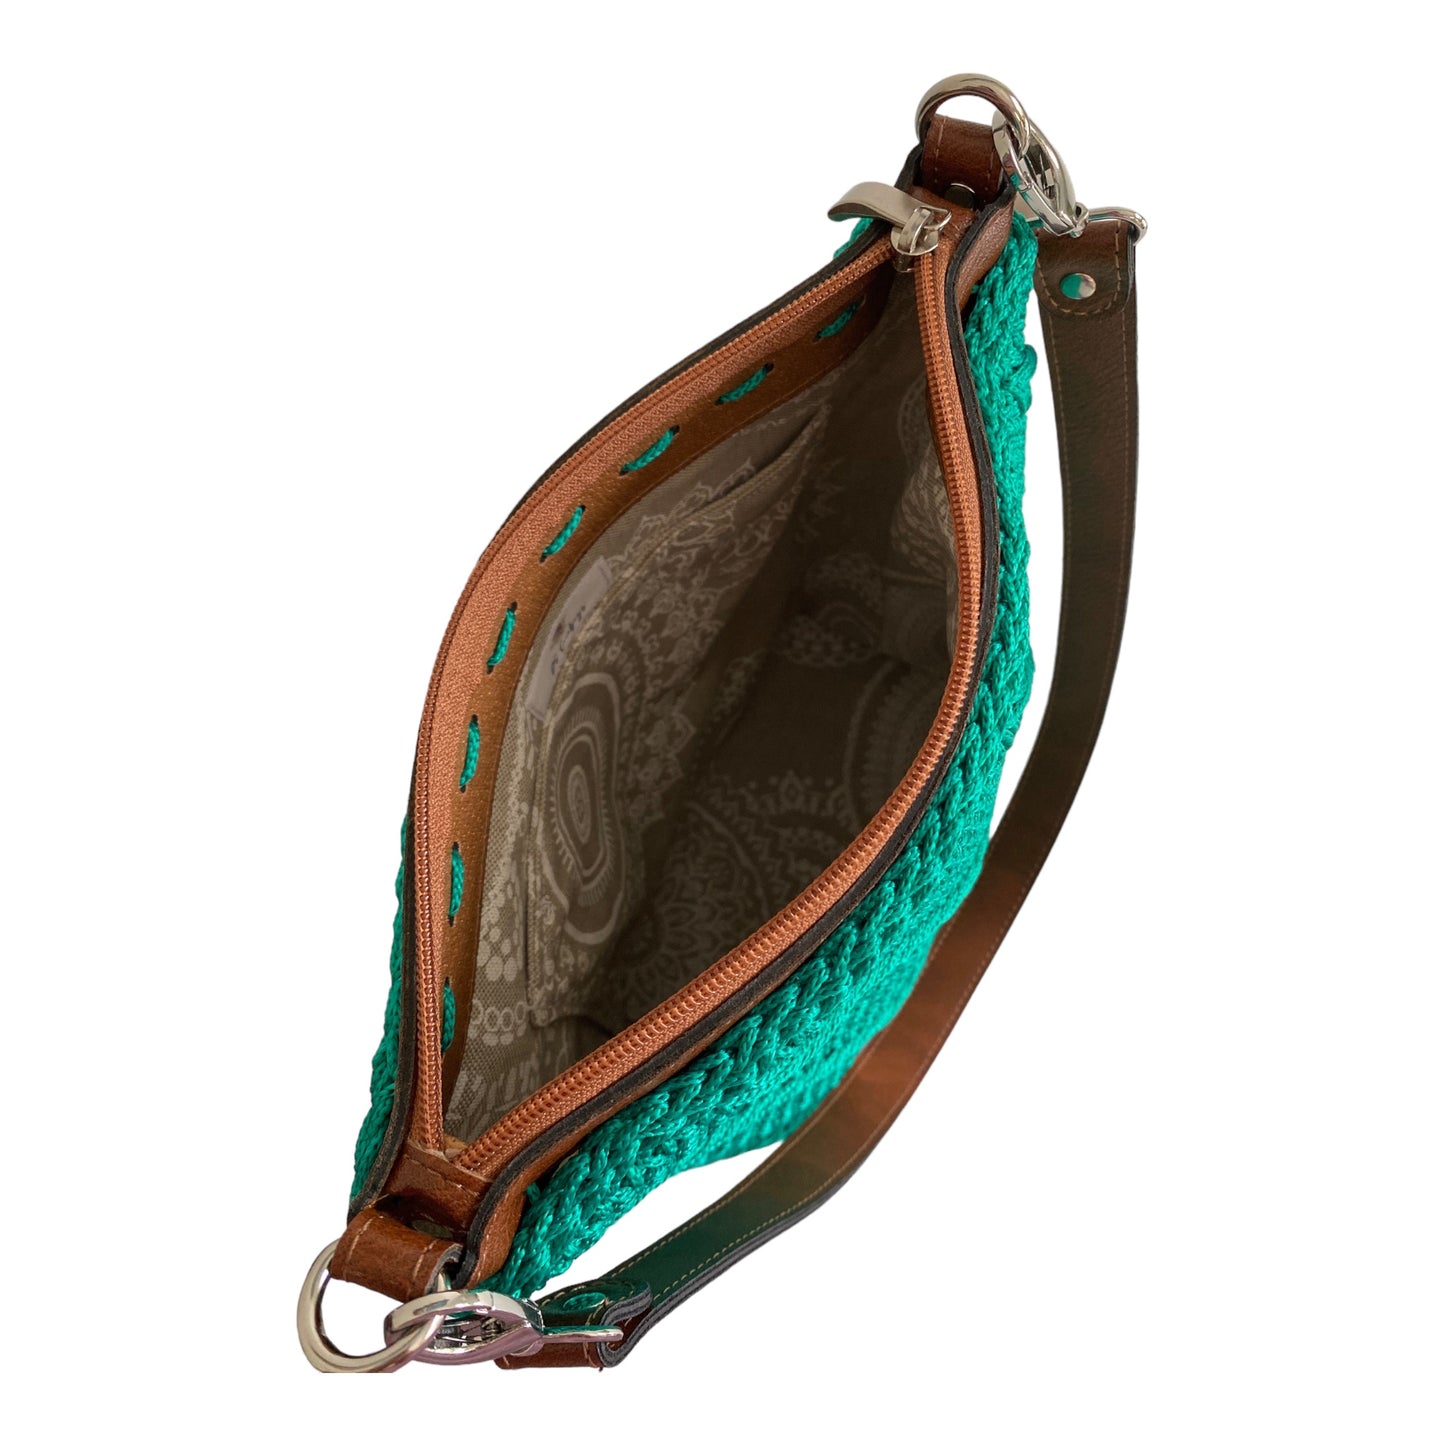 AMELIA - Vibrant green colour handmade shoulder bag